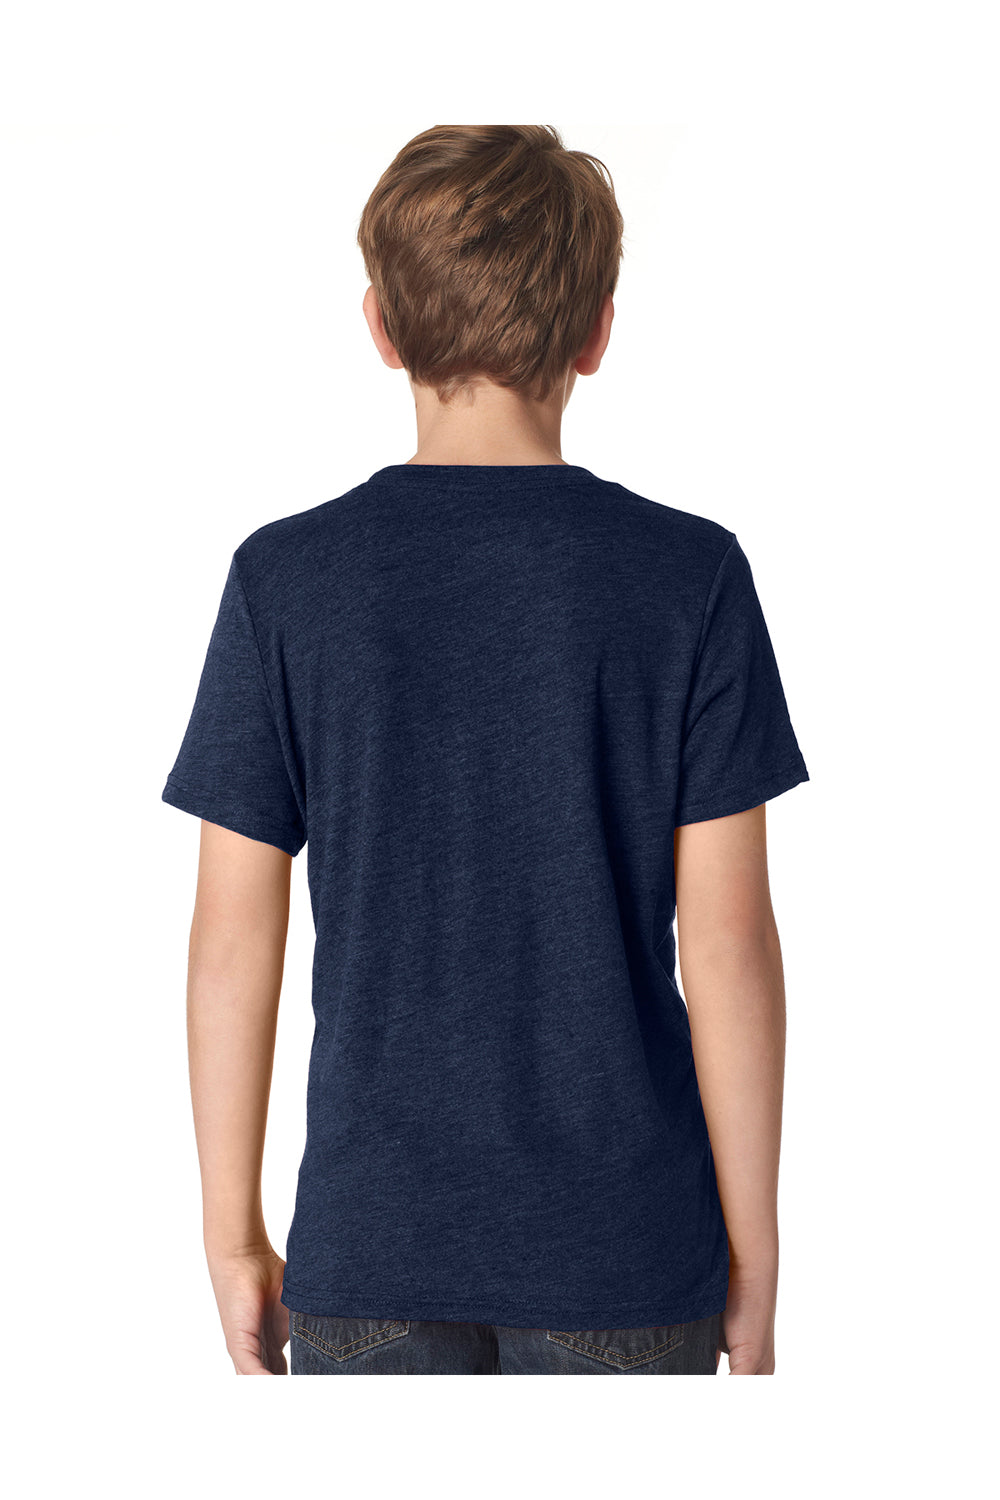 Next Level N6310 Youth Jersey Short Sleeve Crewneck T-Shirt Navy Blue Back